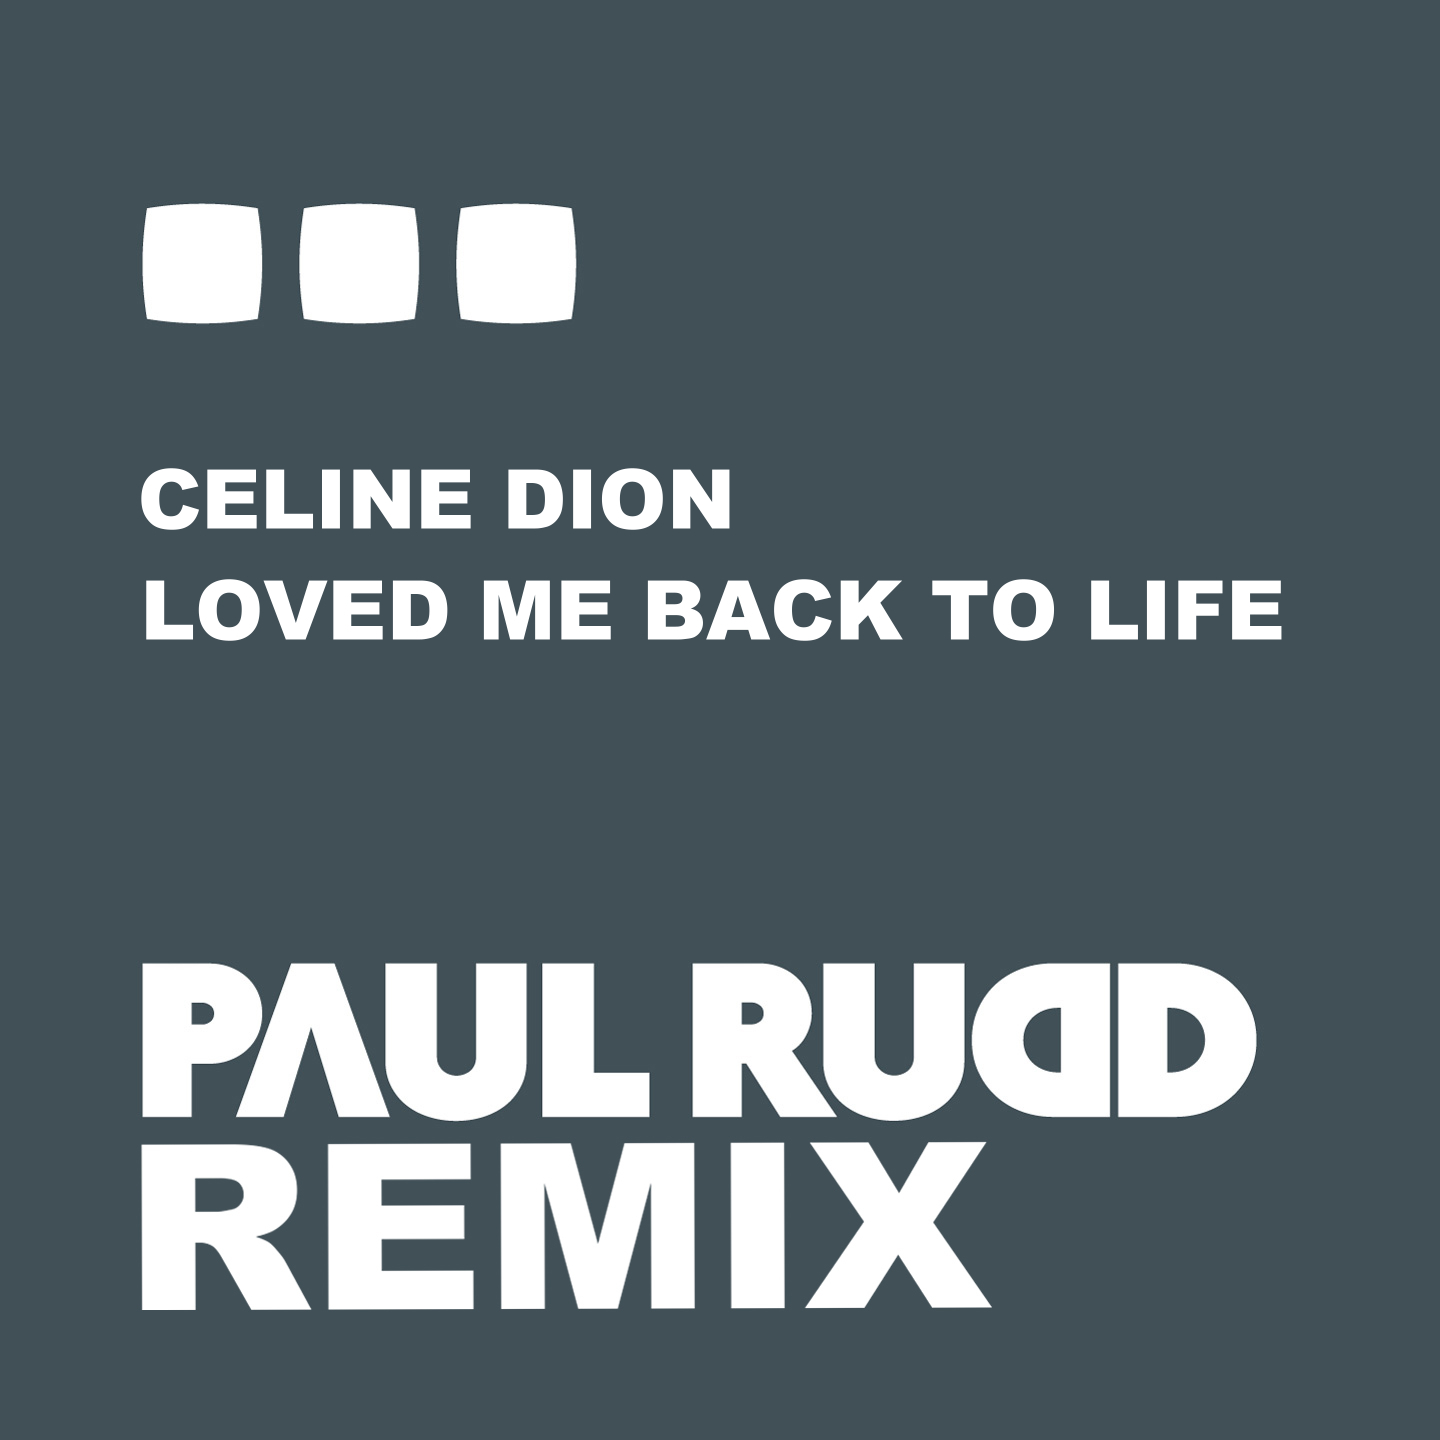 Come back to life. Celine Dion Loved me back to Life. Paul is Life. Back to me. Love me back to Life Natalie перевод.